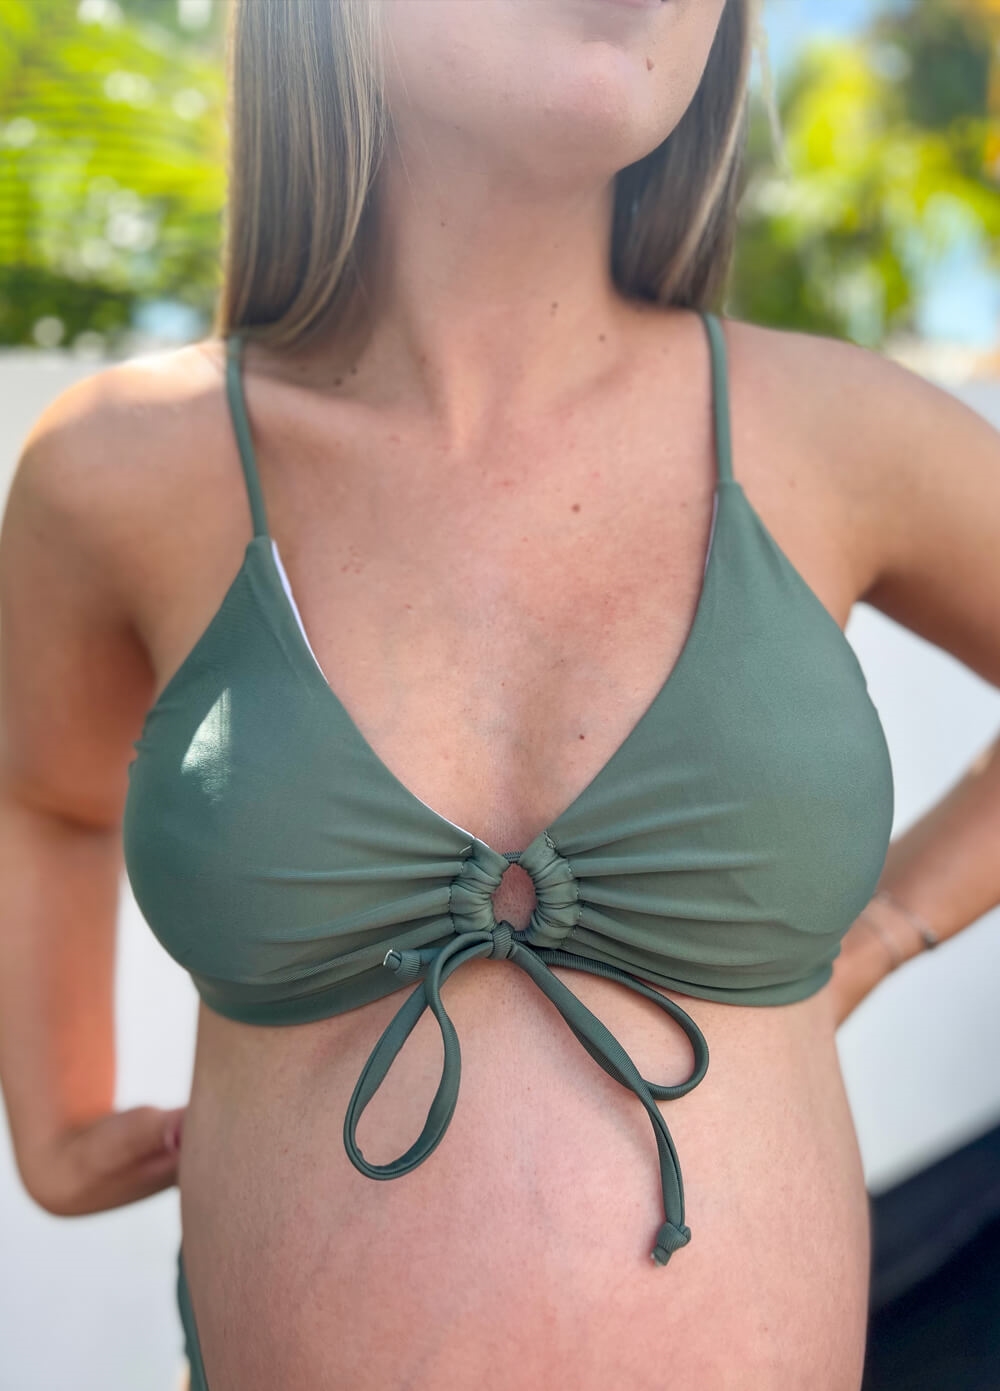 Lait & Co - Mackay Maternity Bikini Set in Khaki | Queen Bee